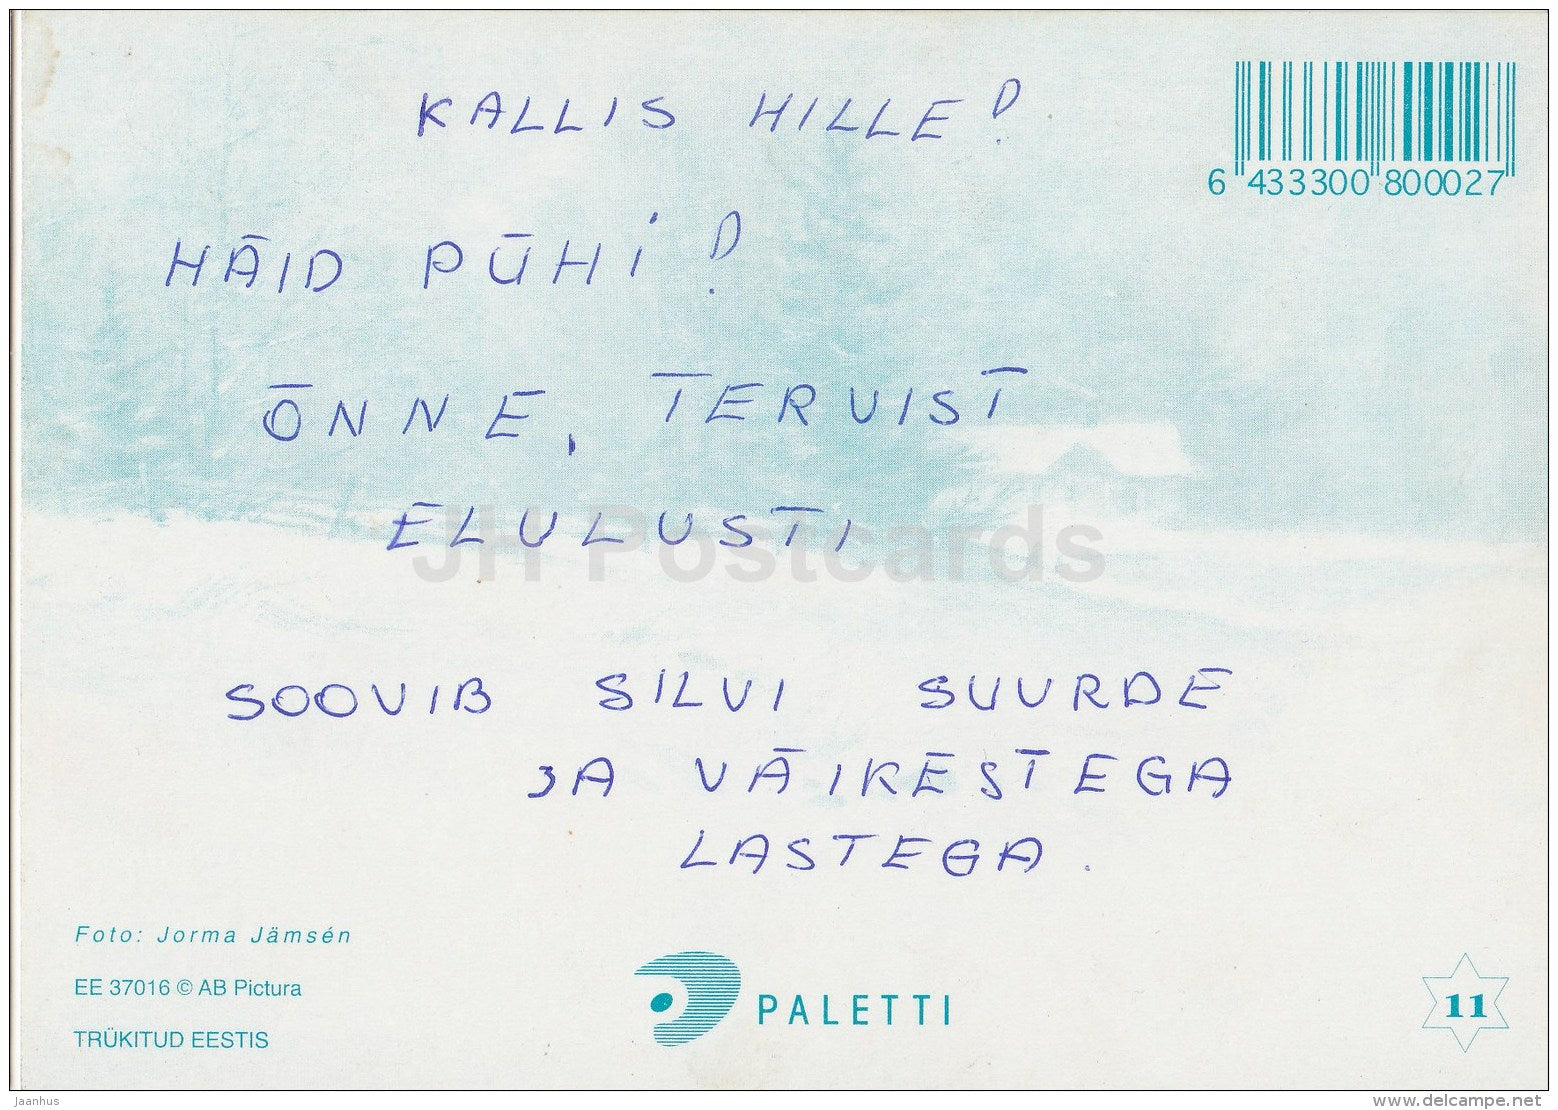 Christmas Greeting Card - fir tree - Estonia - used in 2000s - JH Postcards